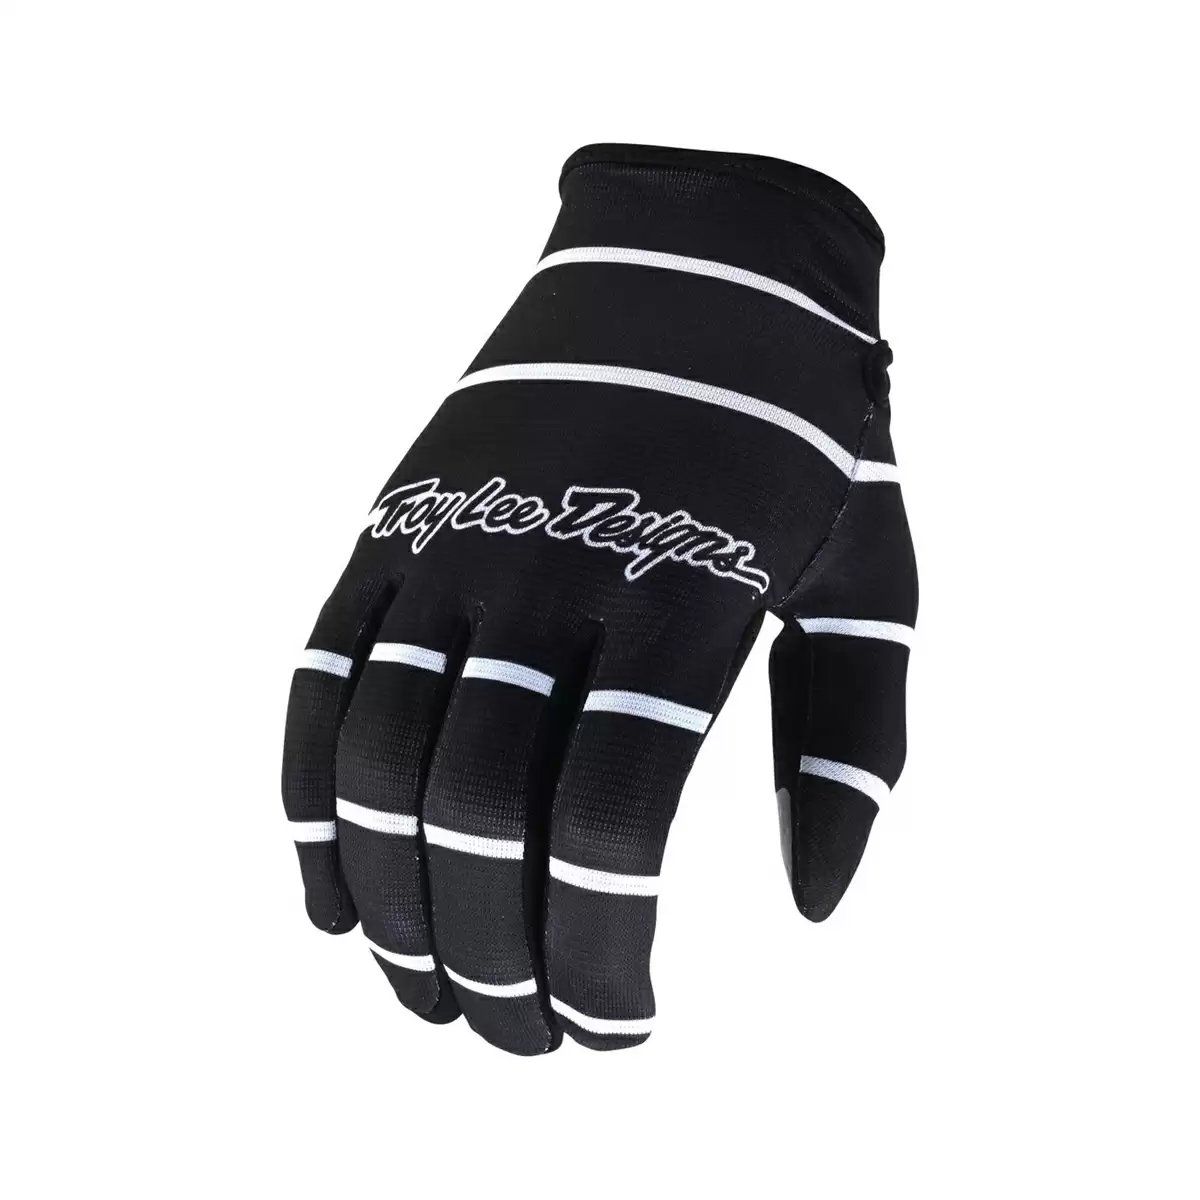 Gloves Flowline Stripe Black Size XL - image